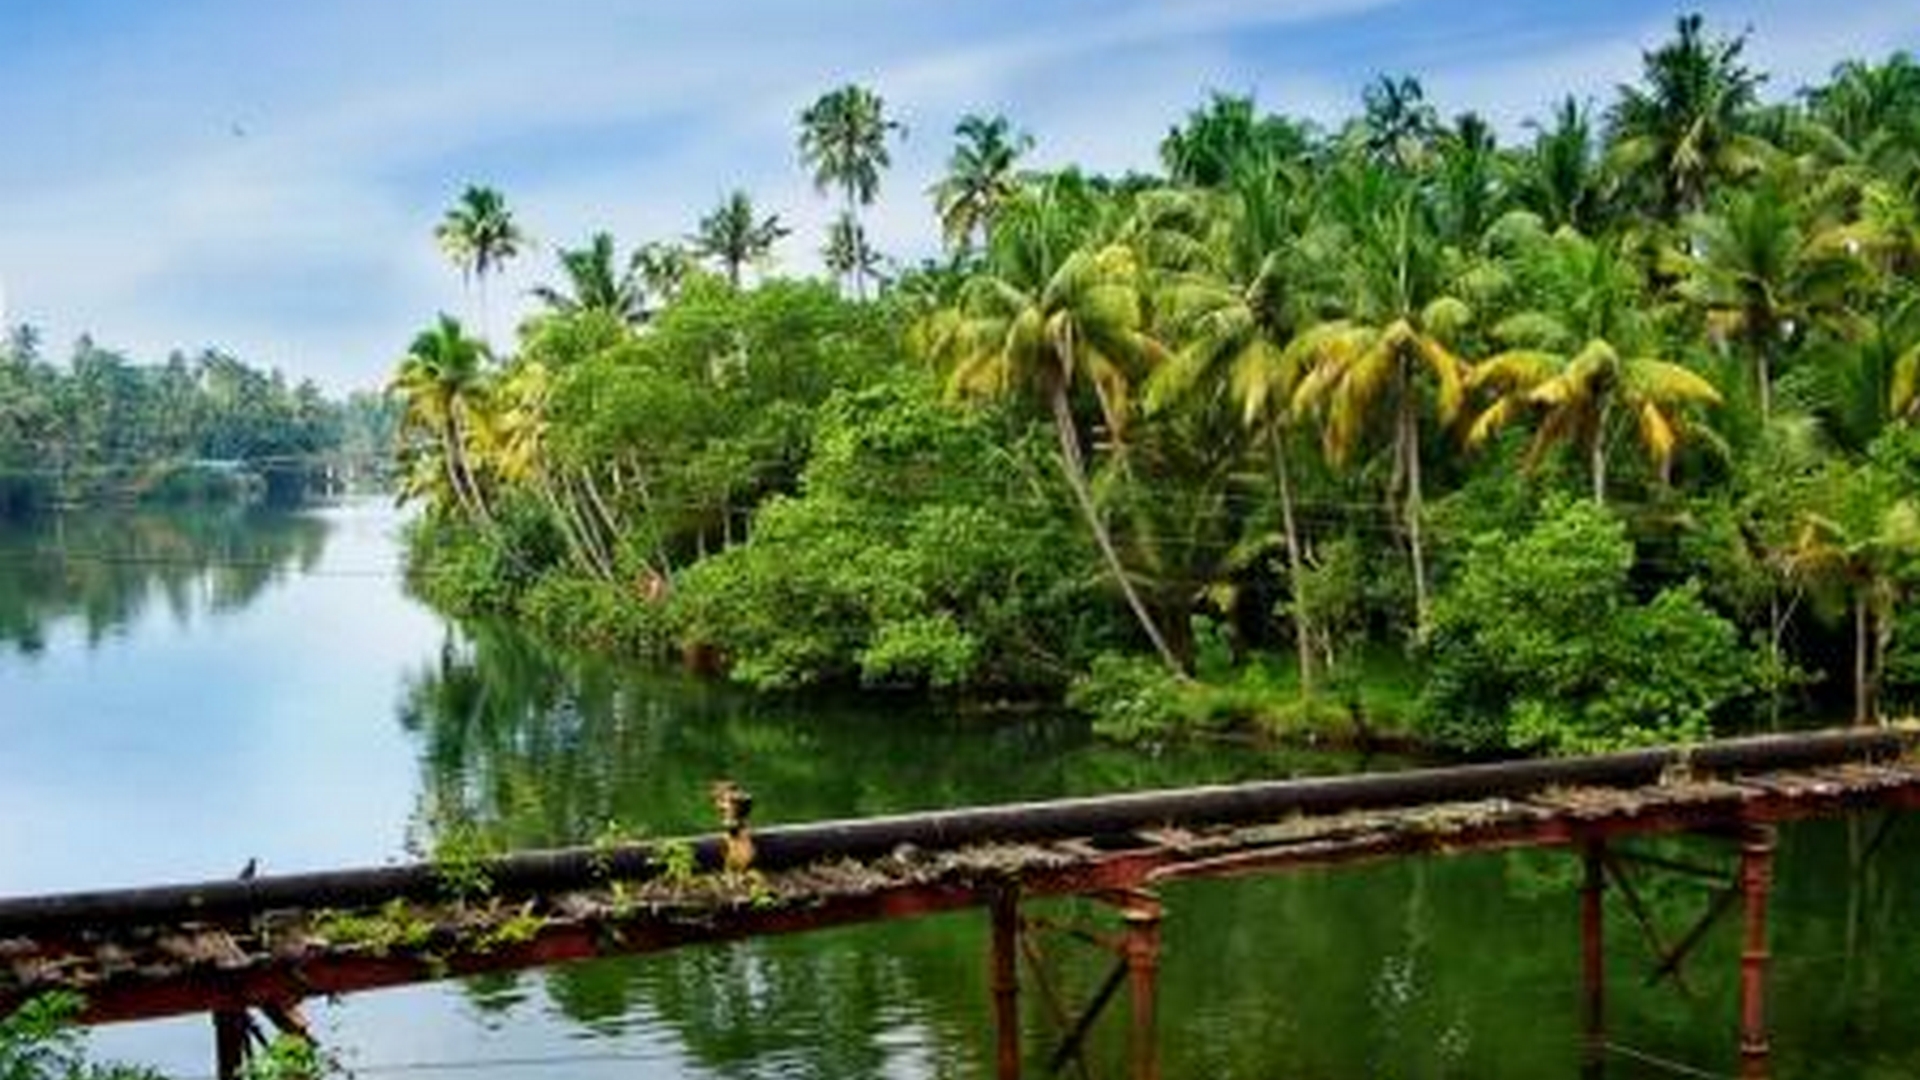 kollam tourist places tamil